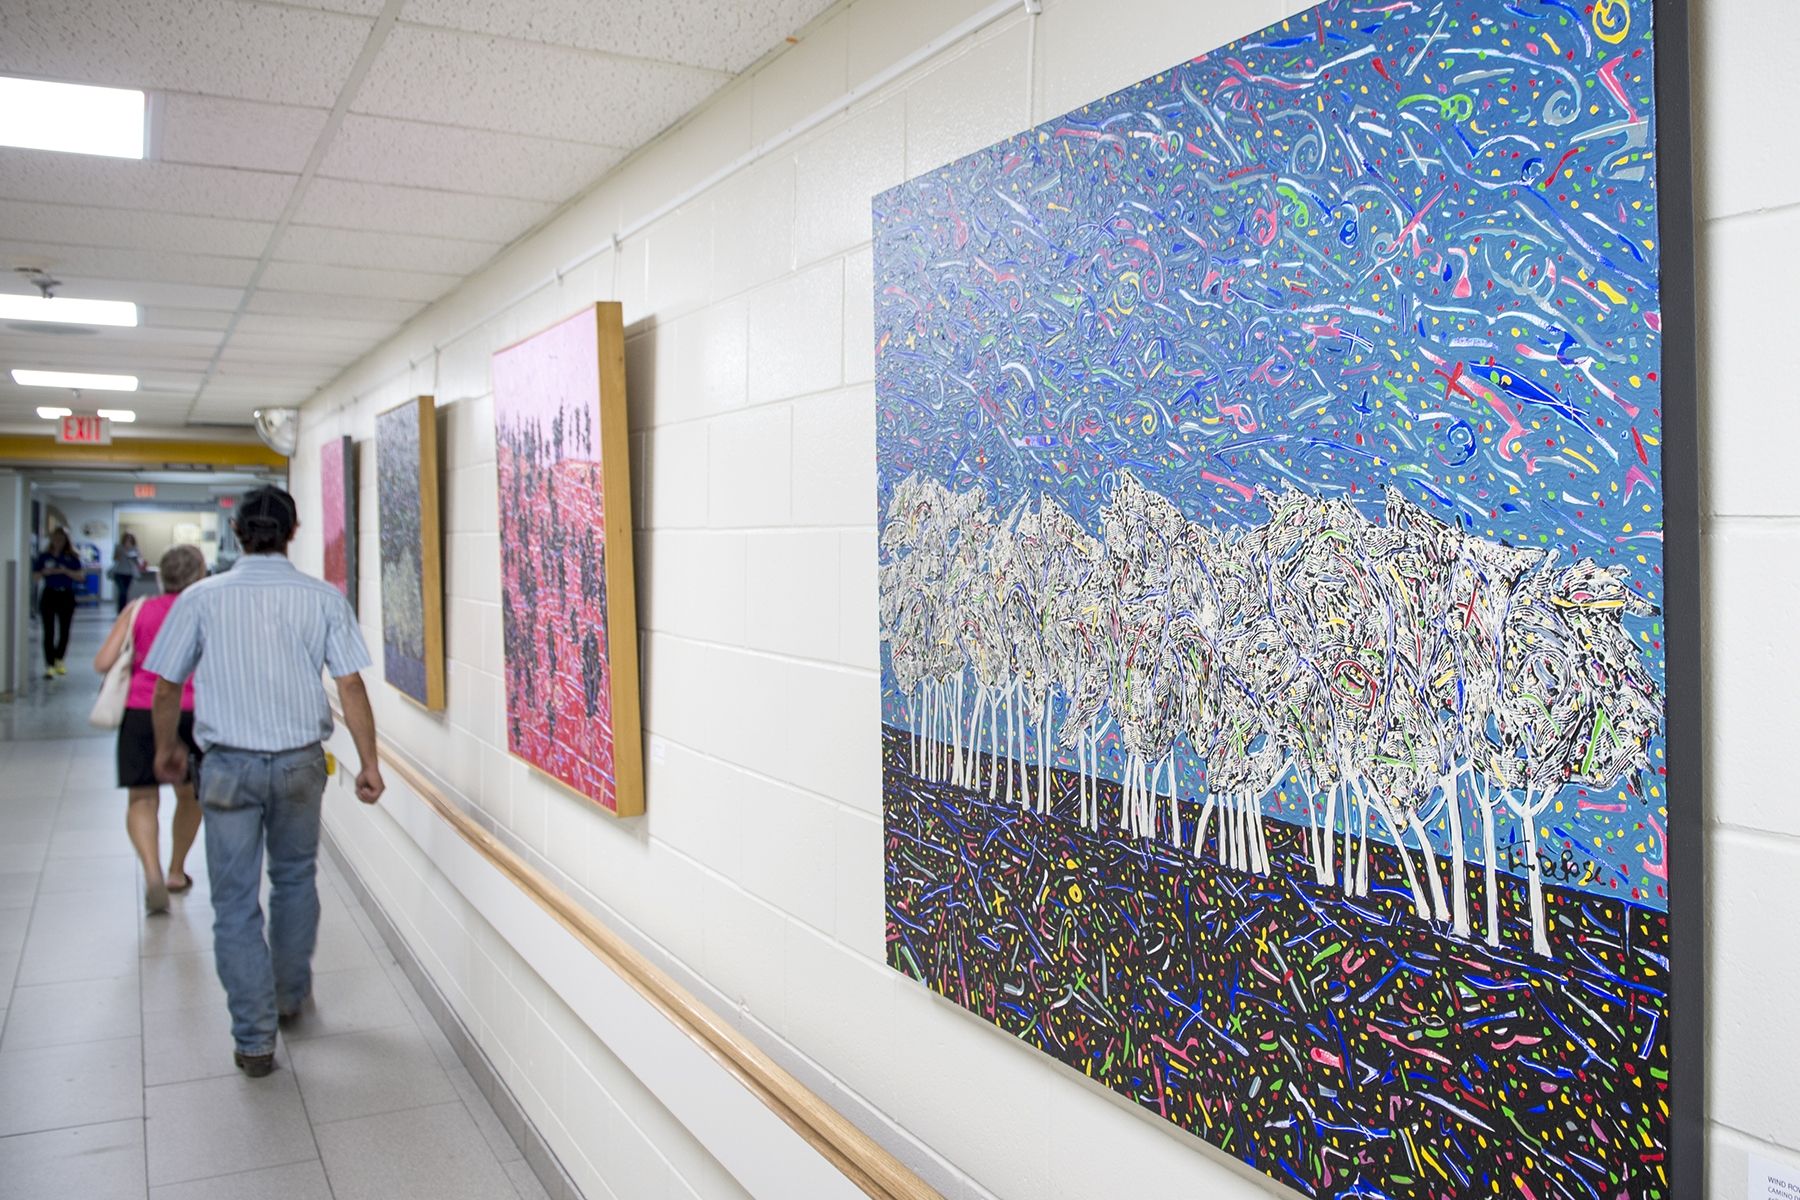 New art brightens up the hospital's main hall